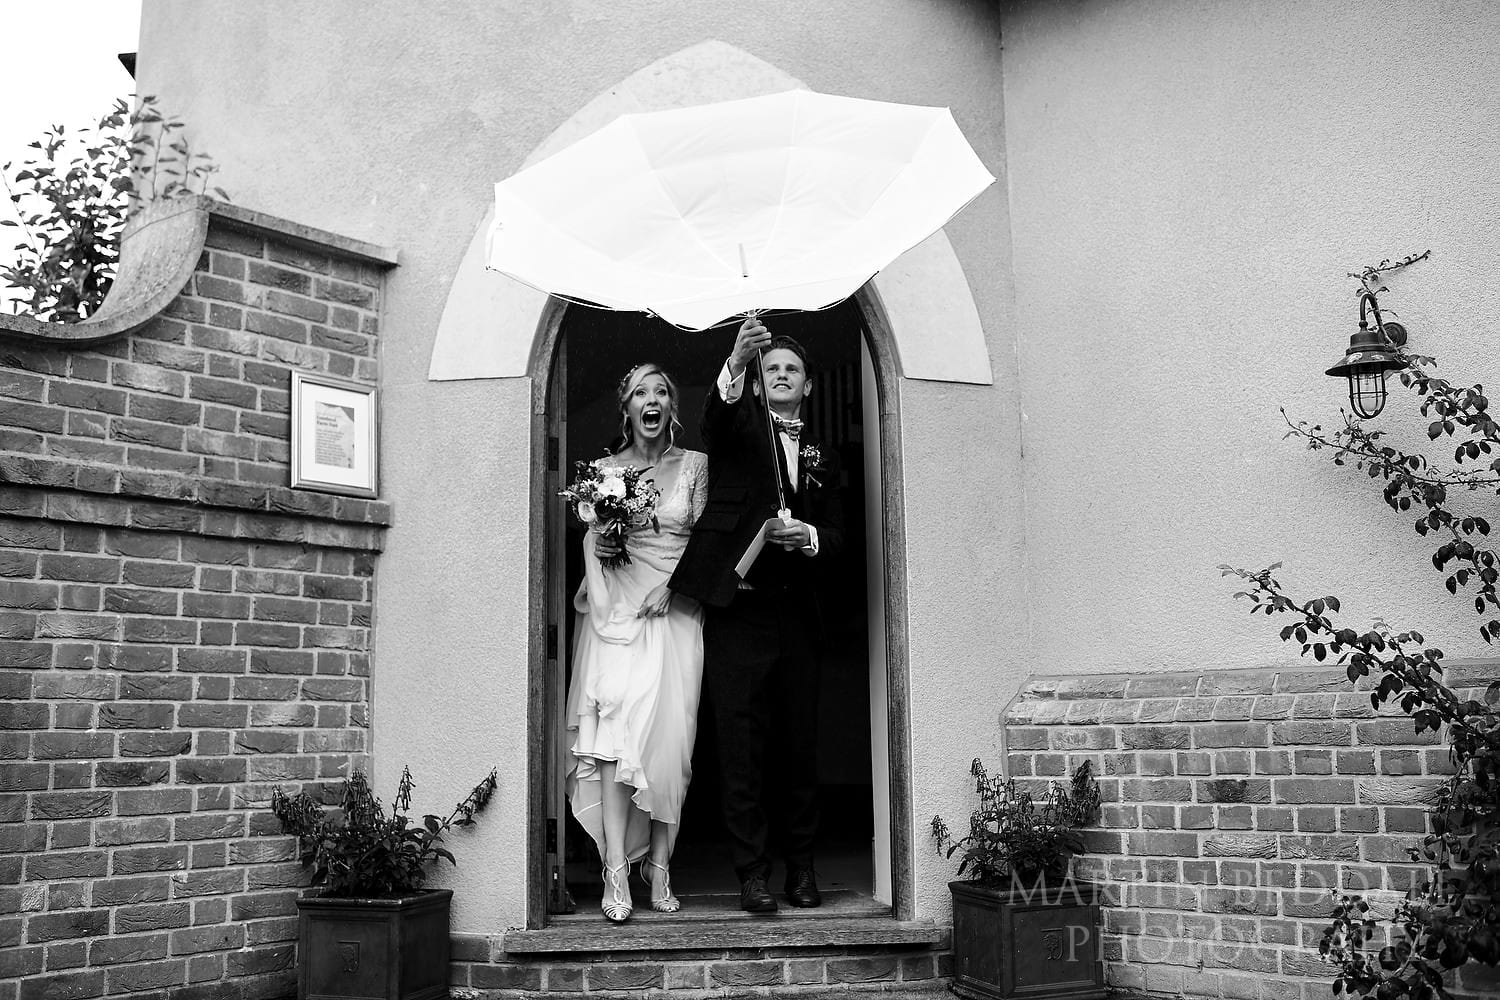 Rain outsdie this East Sussex wedding